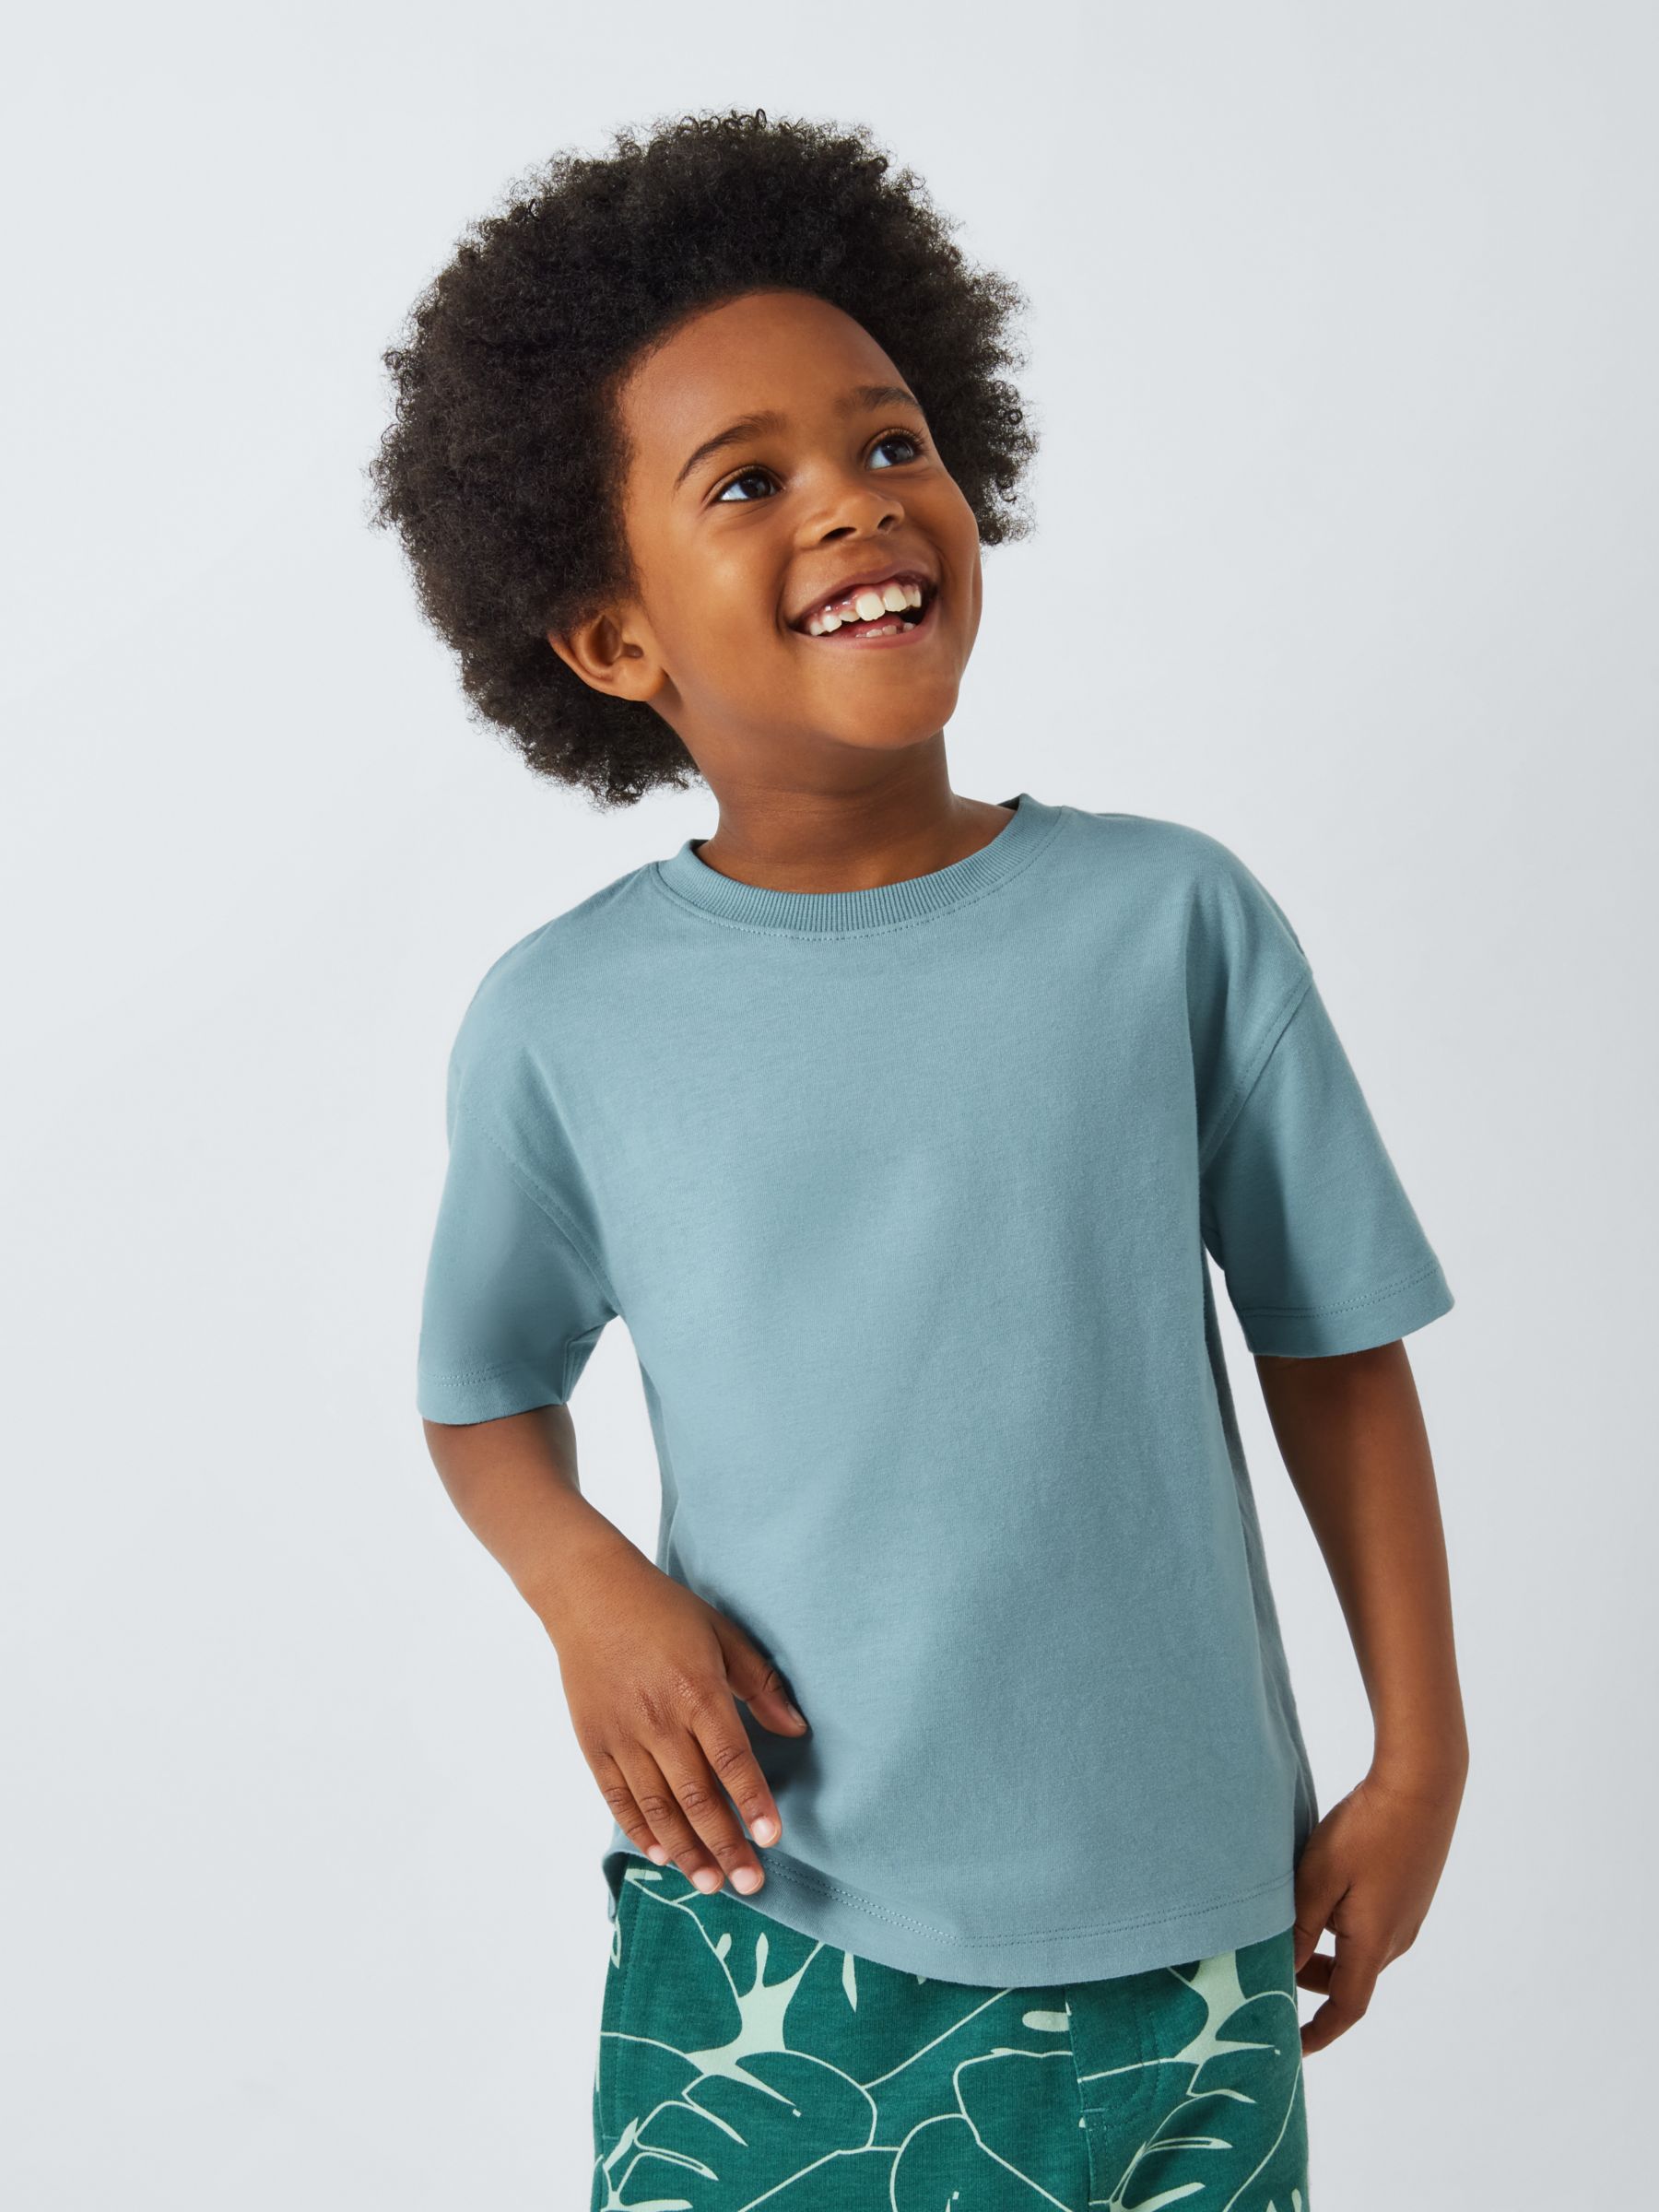 John Lewis Kids' Short Sleeve Cotton T-Shirt, Pack of 4, Multi, 7 years